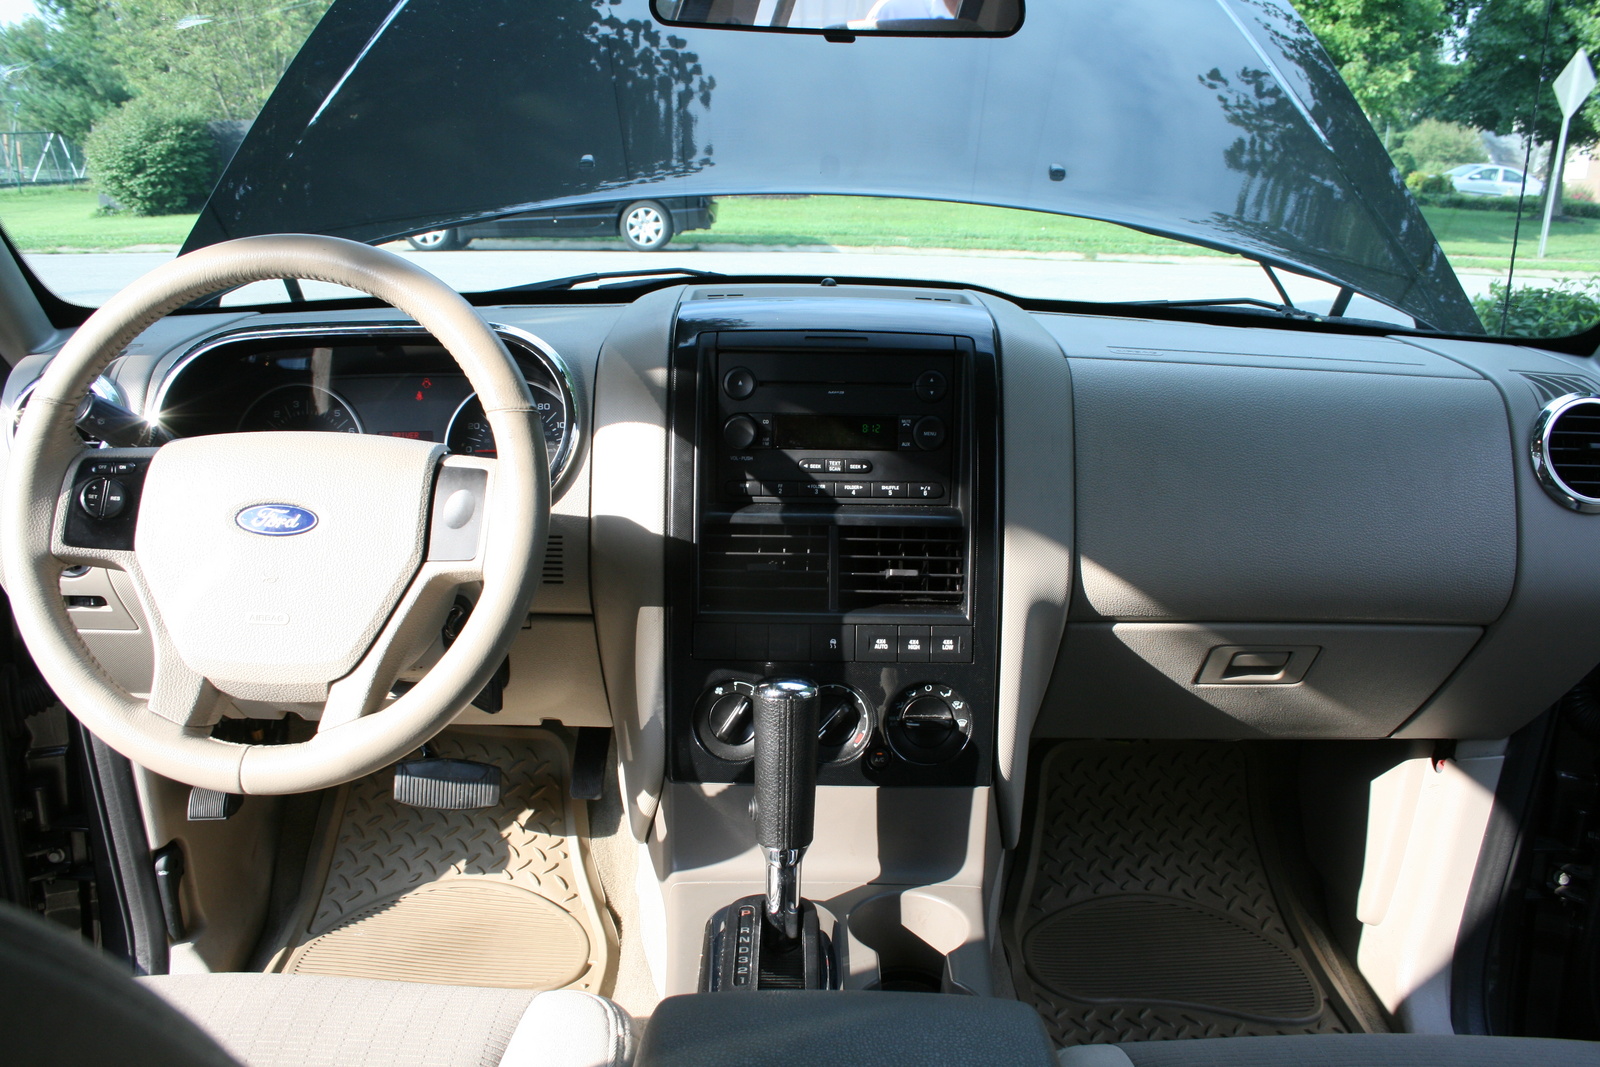 2006 Ford explorer interior dimensions #10